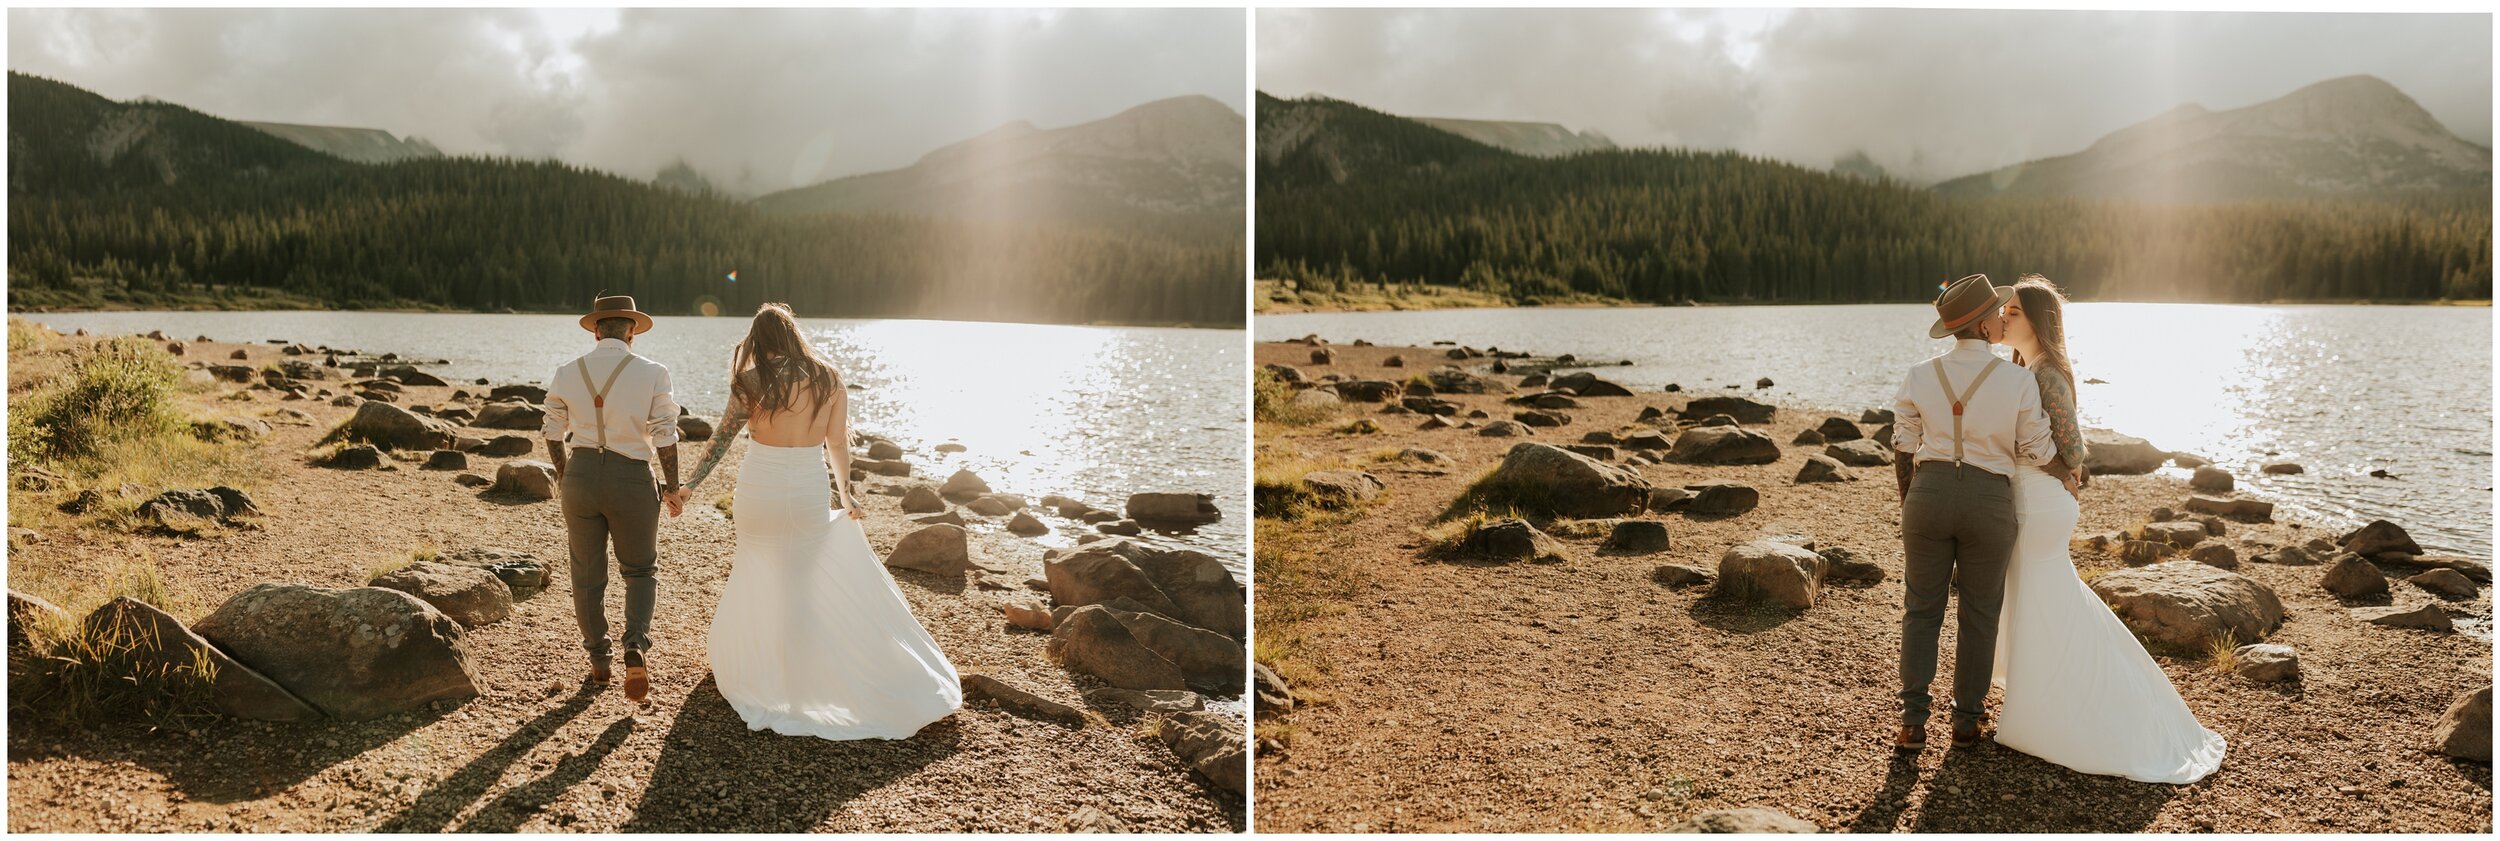 Brainard Lake Colorado LGBTQ Elopement Wedding Photography_0012.jpg